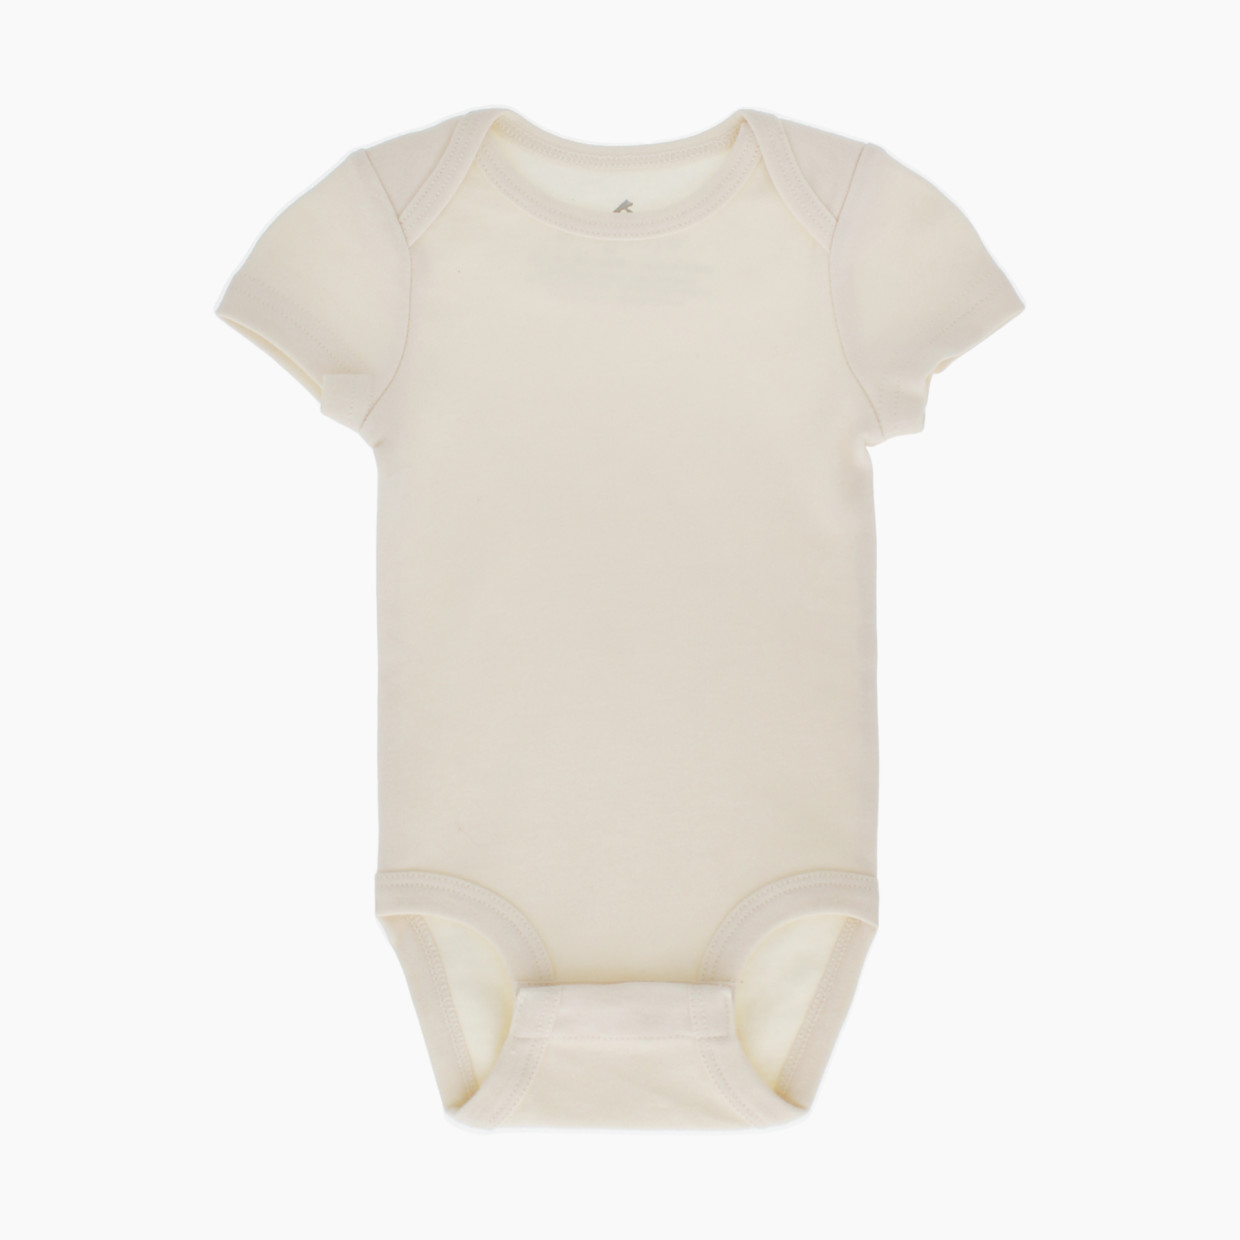 Snugabye Baby Organic Bodysuit - Eggnog, 3-6 M.